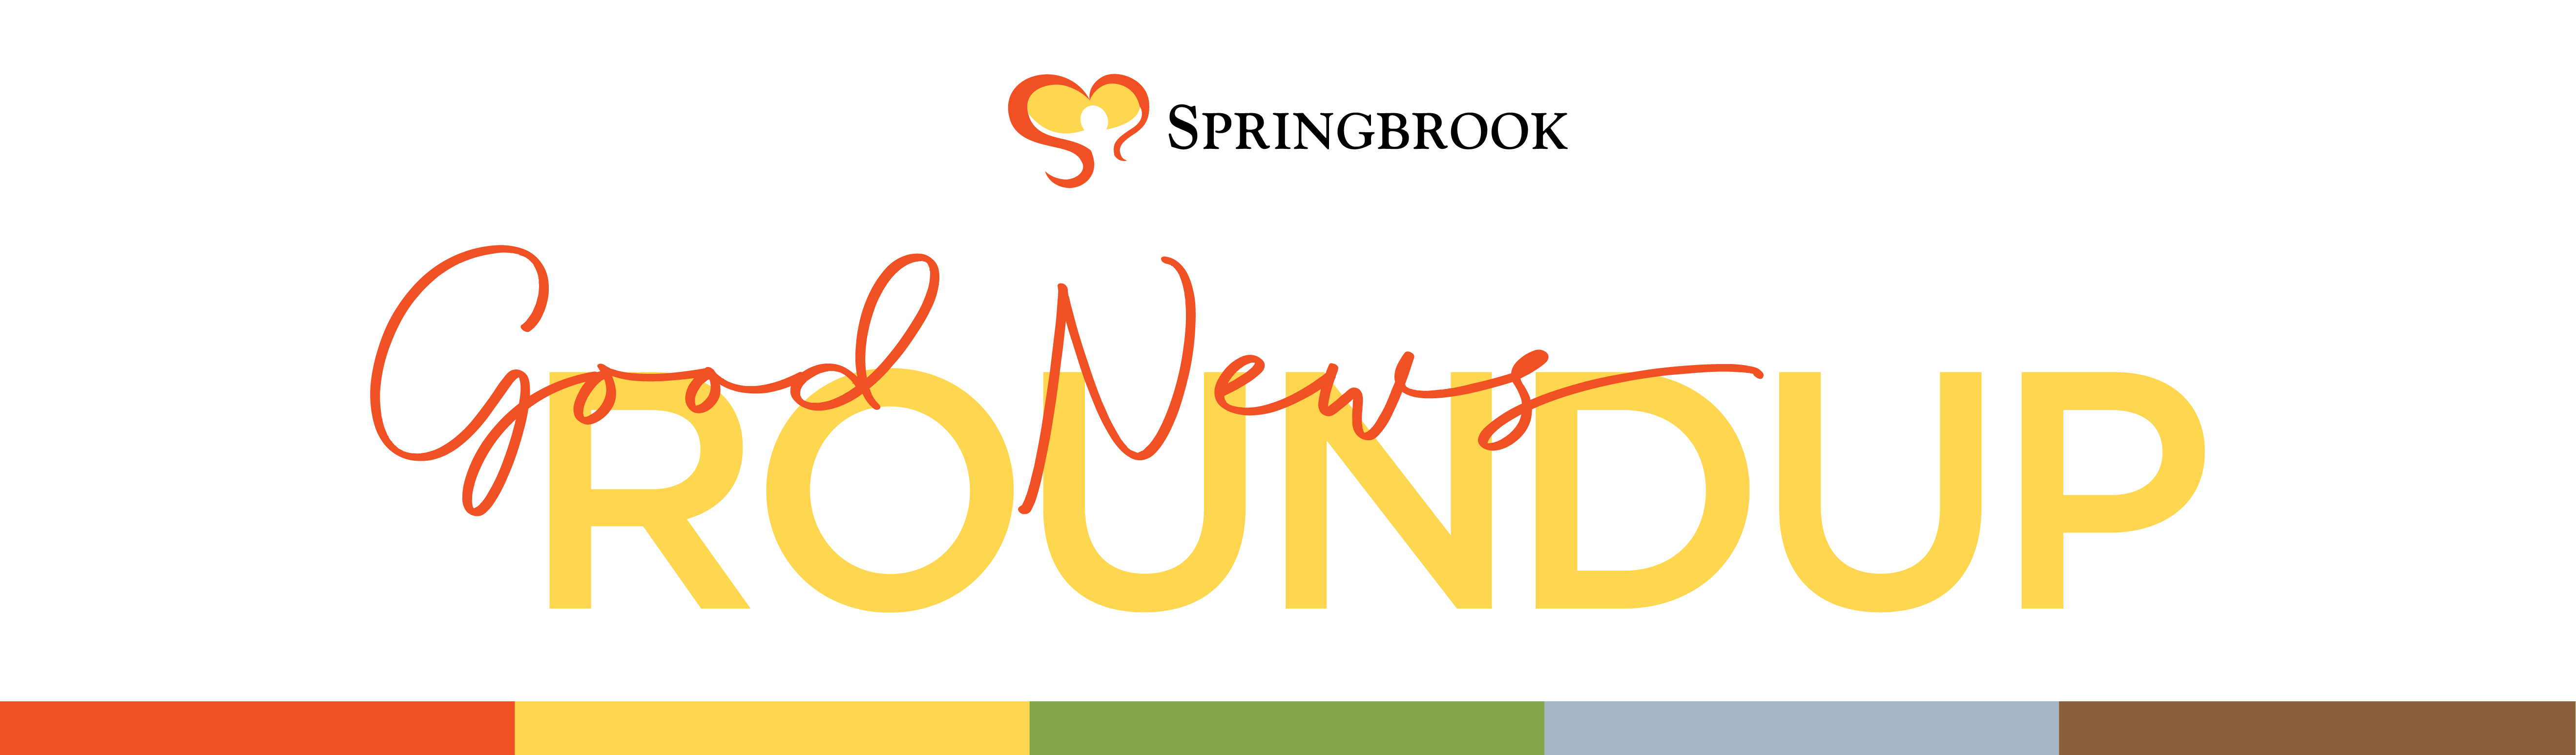 Good News Roundup Banner Options 01 - Giving